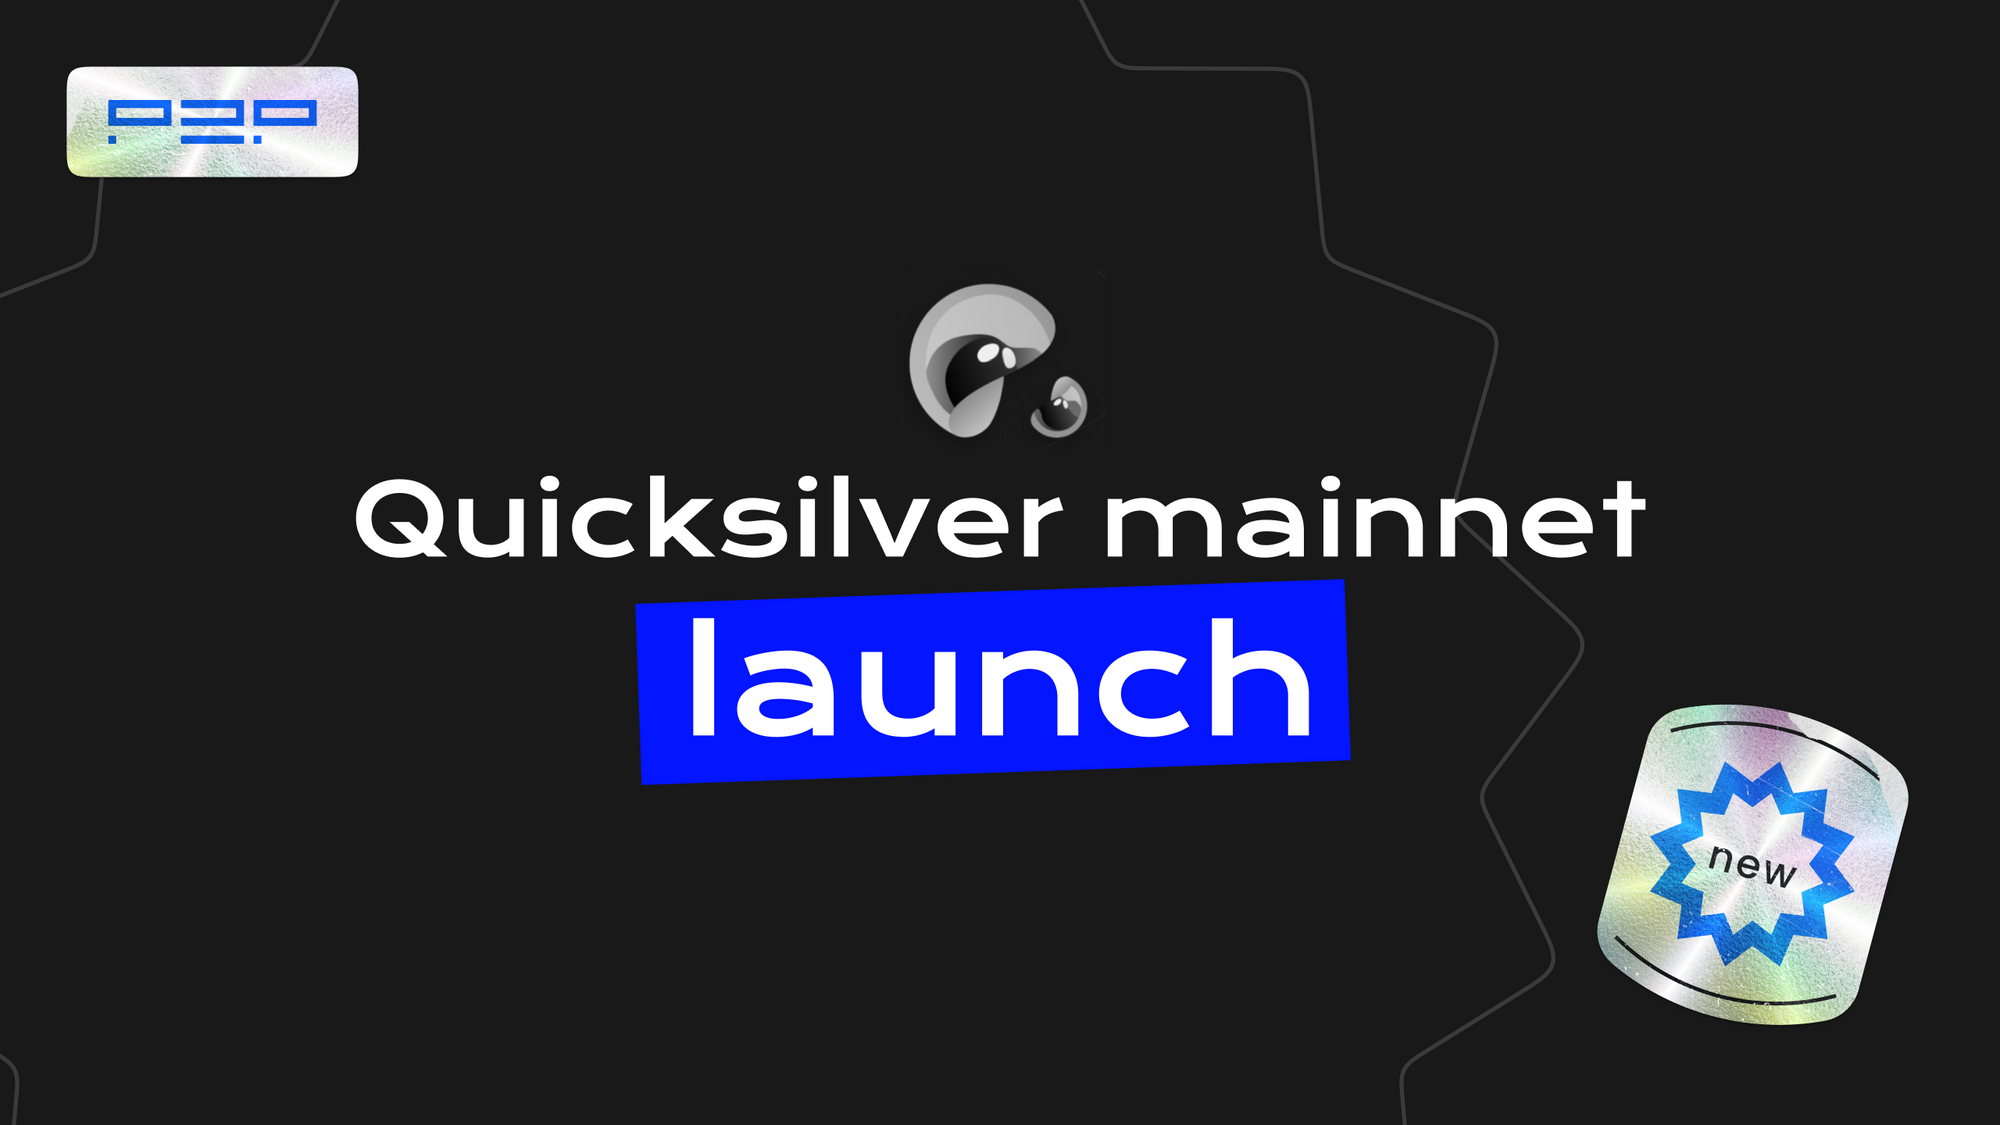 P2P Joines Quicksilver Mainnet as a Genesis Validator